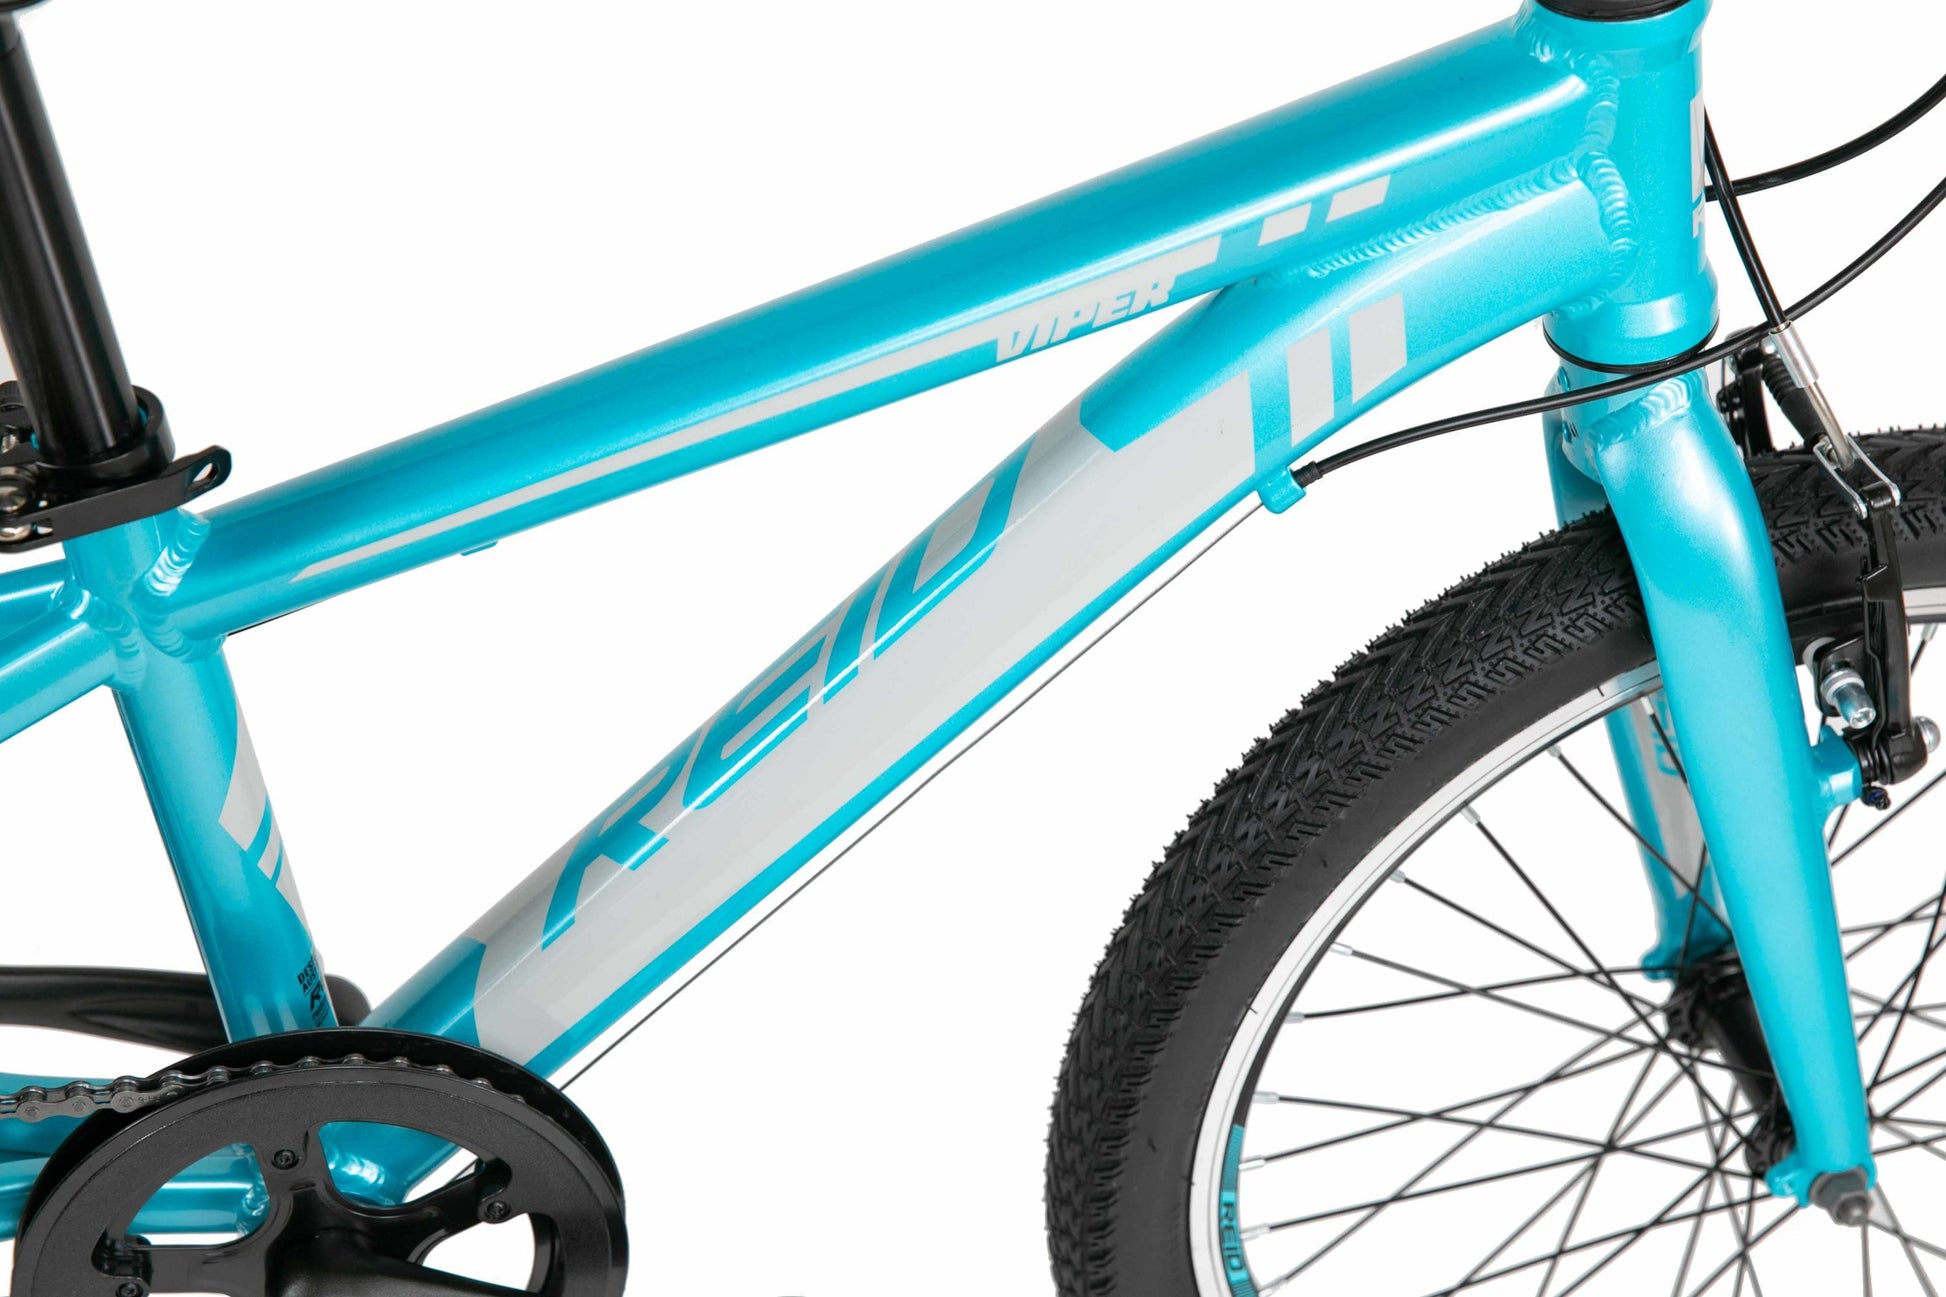 Viper 20" Kids Bike in Light Aqua showing Reid logo on bike frame from Reid Cycles Australia 